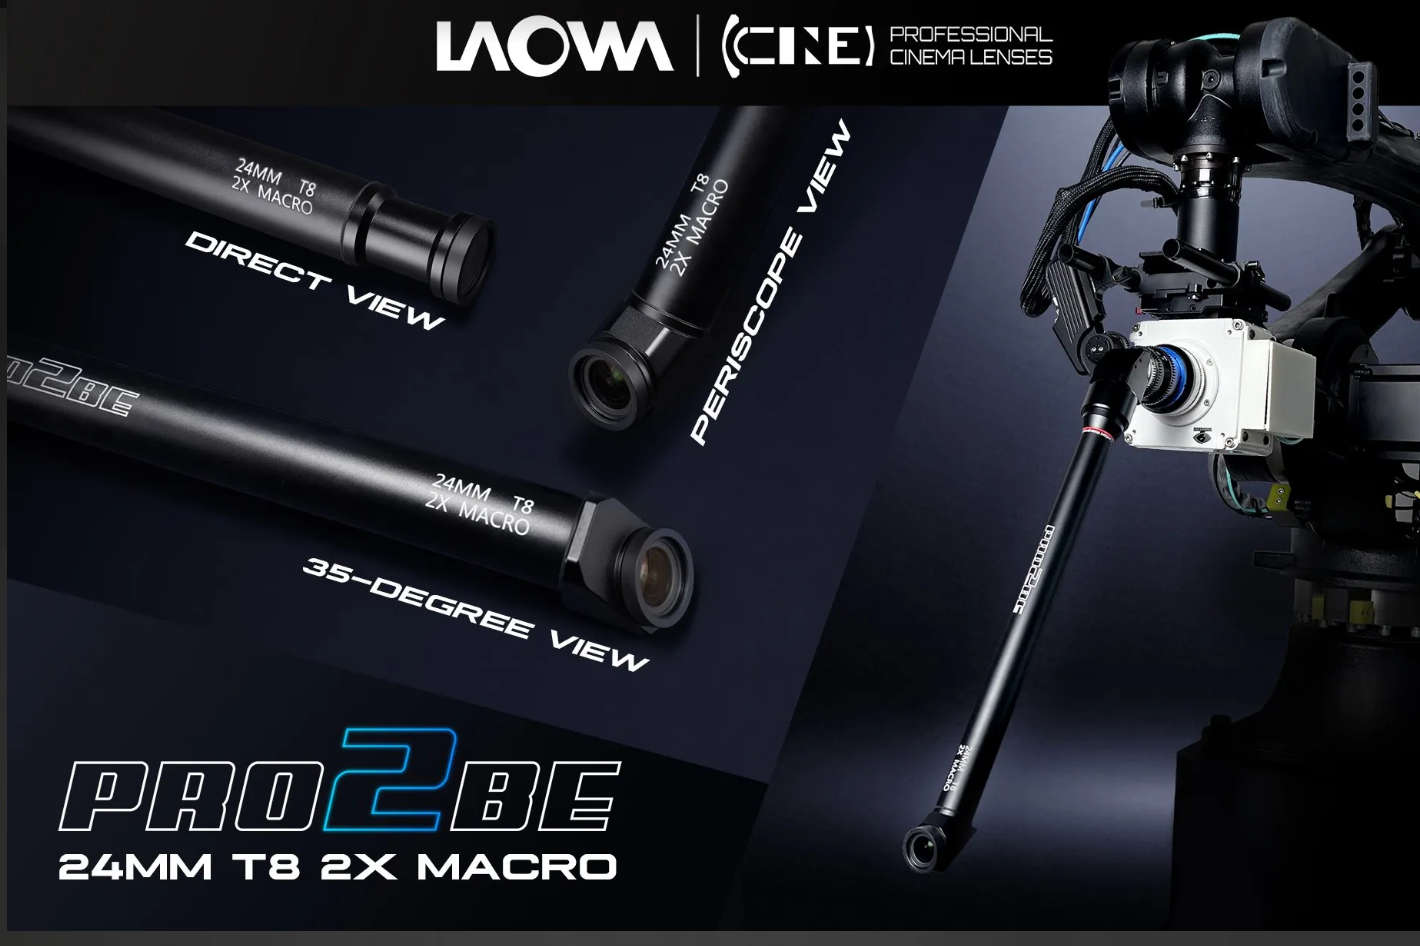 Laowa 24mm T8 2X Macro Pro2be cine-ready lens improves quality